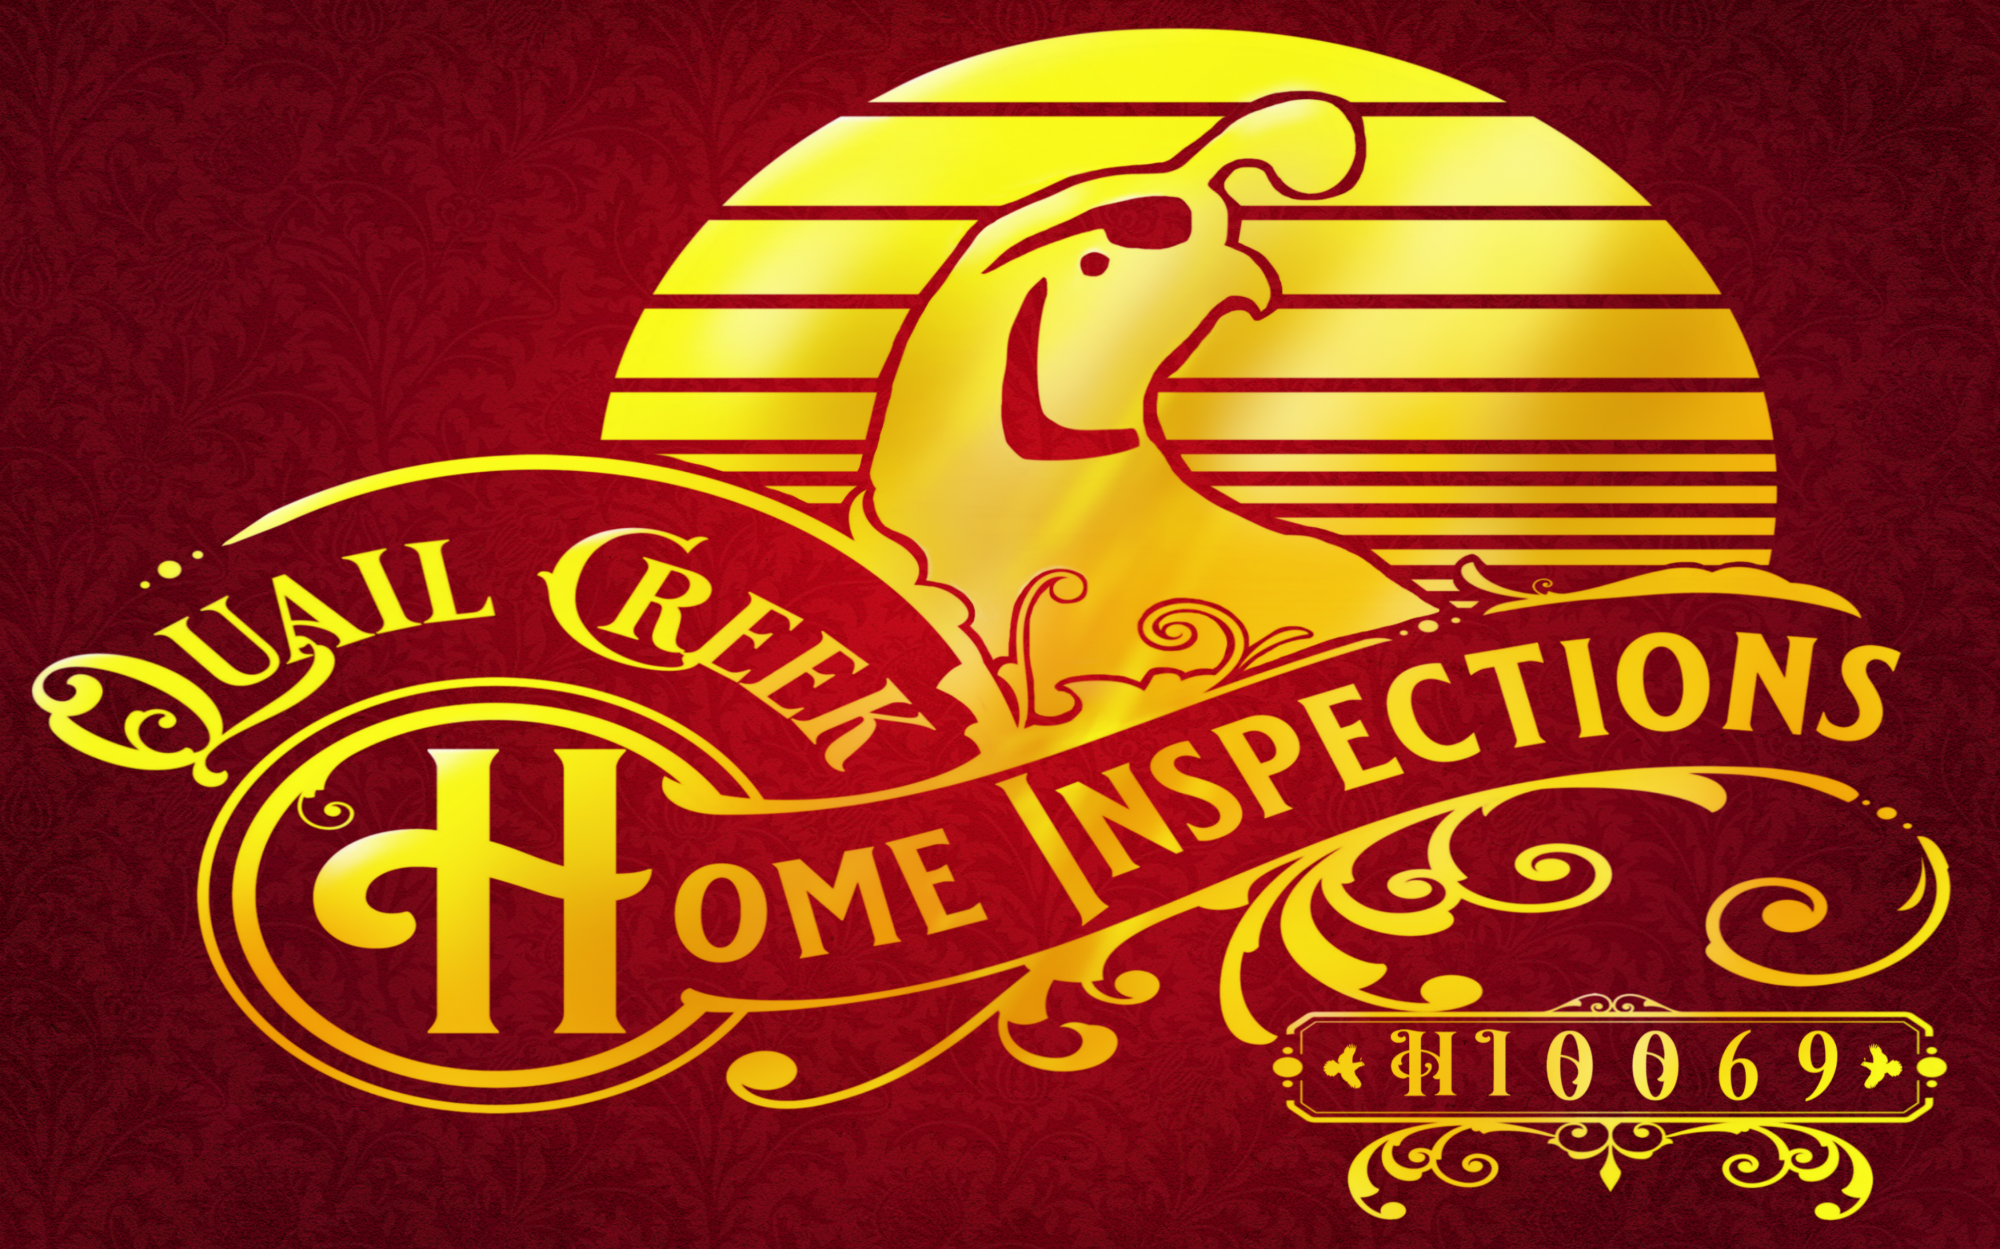 Quail Creek Home Inspections